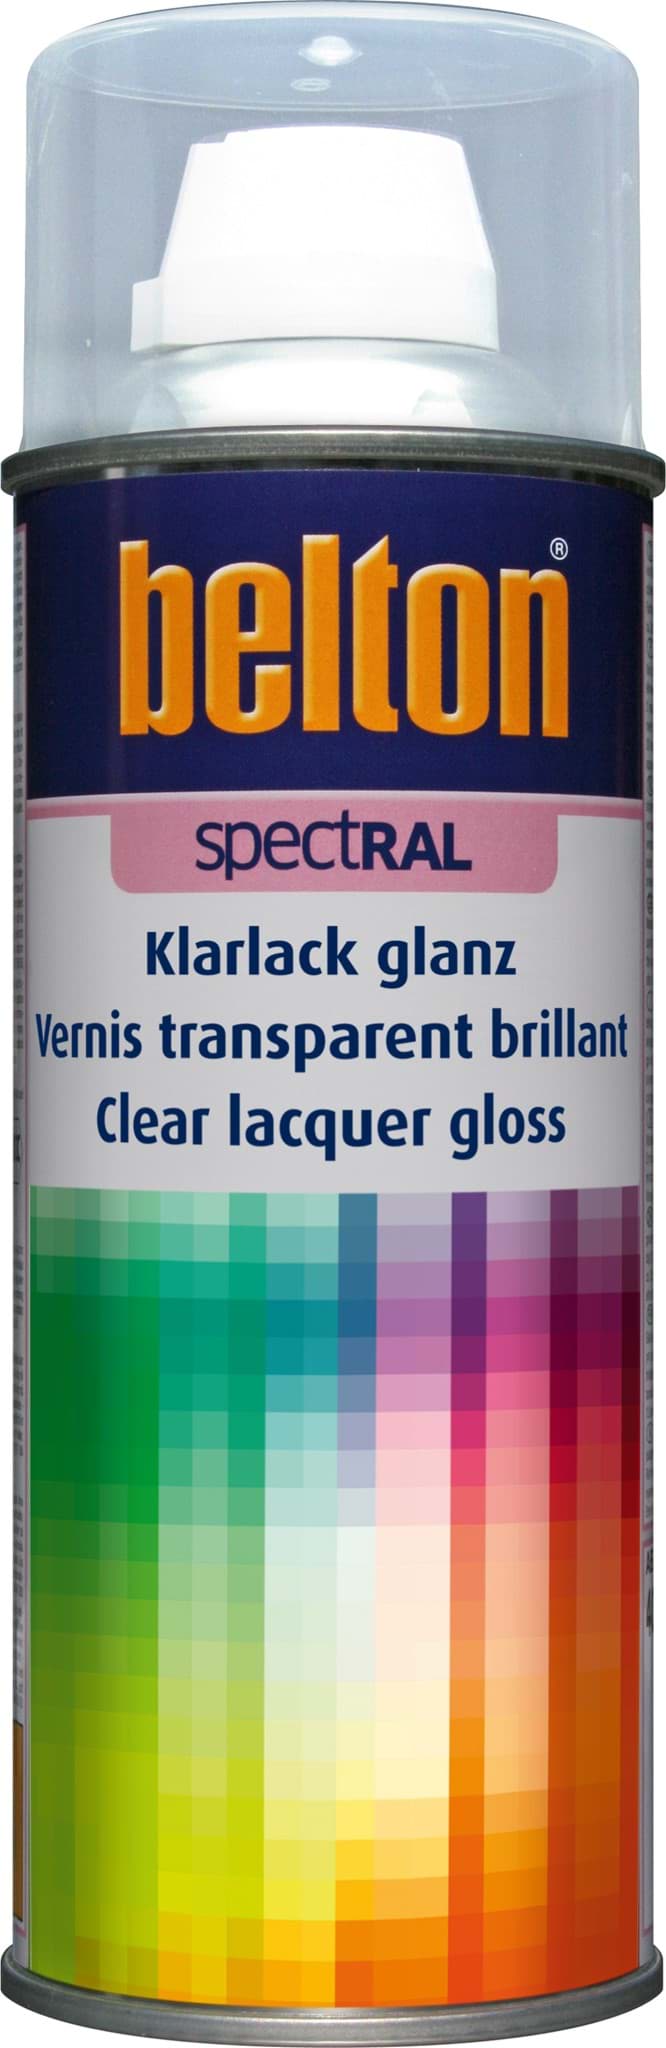 Afbeelding van Belton Spectral Klarlack Transparent glänzend 400ml Lackspray